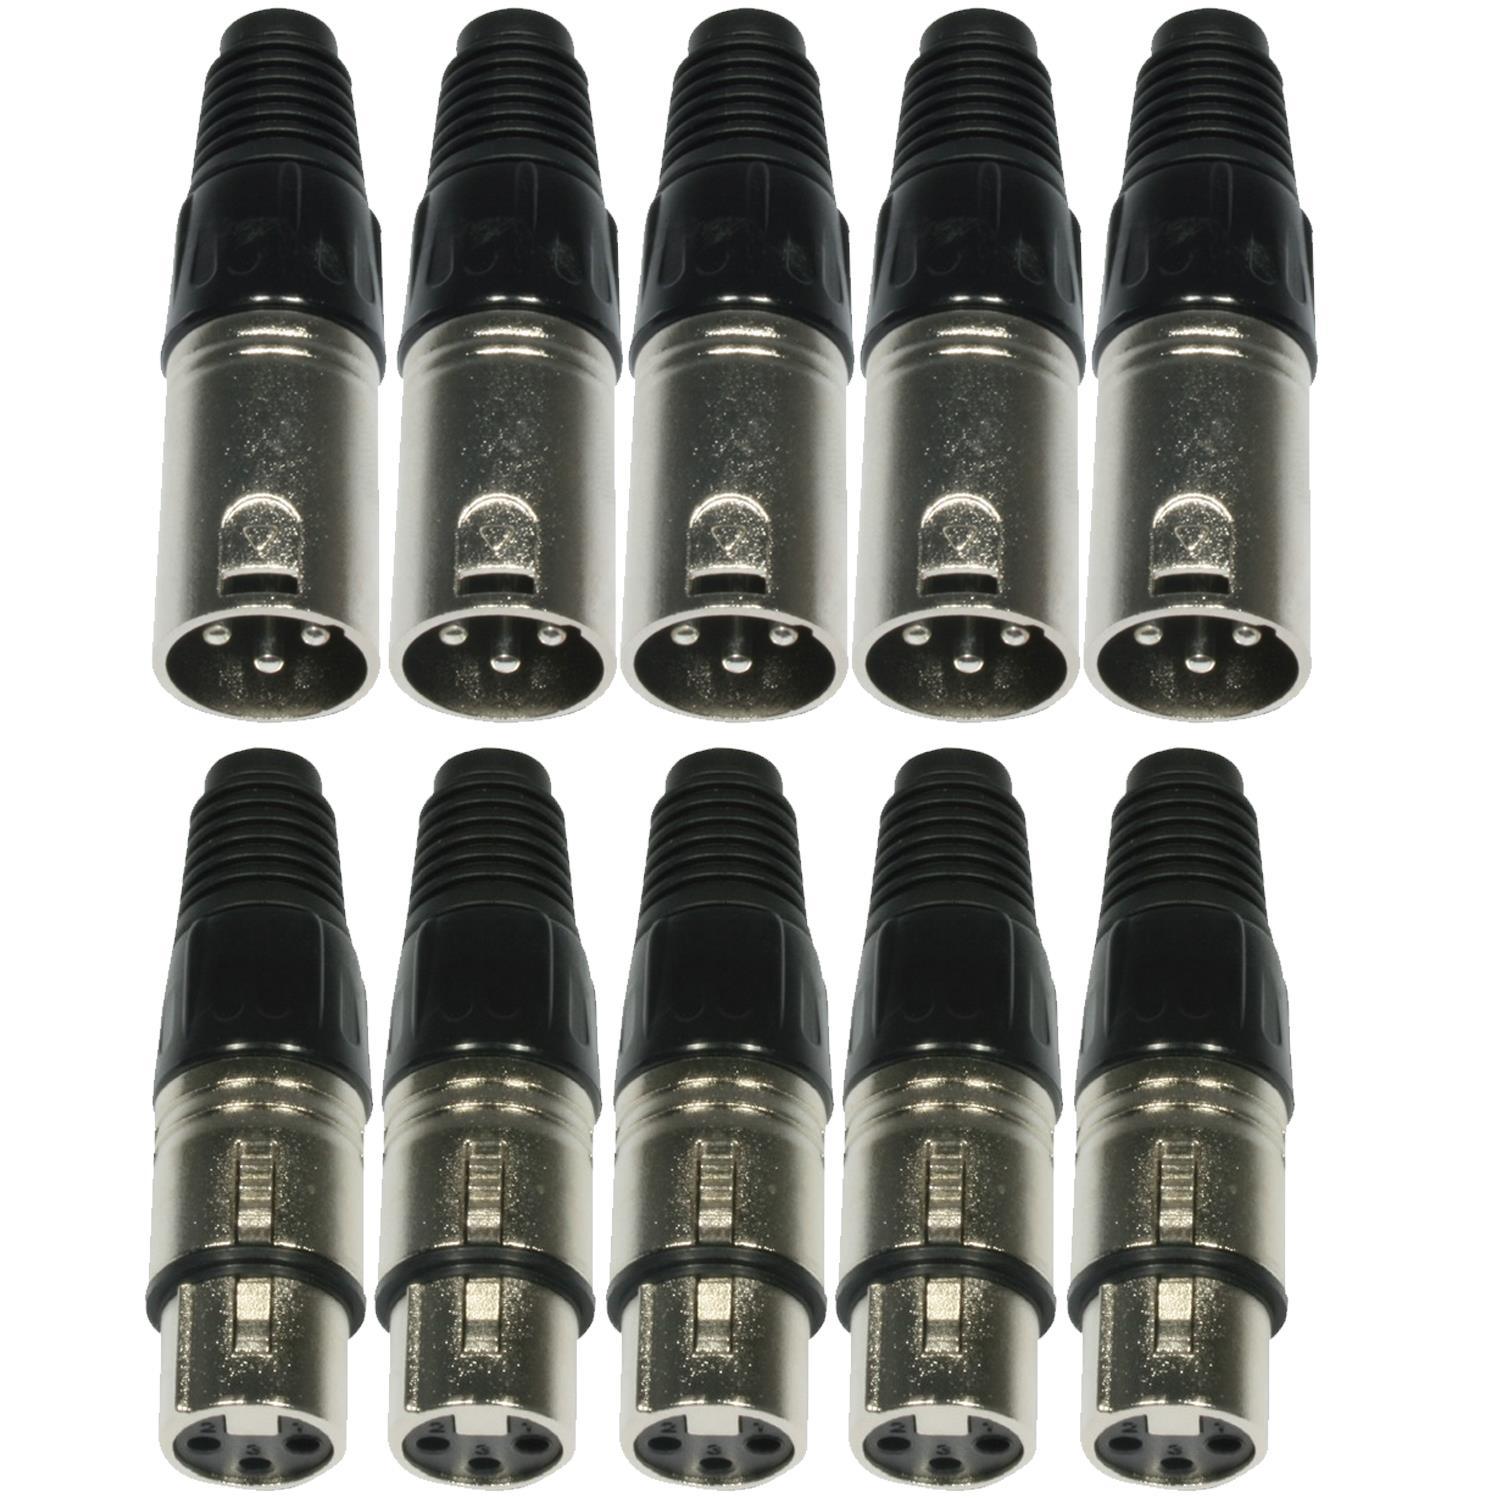 5 X Male XLR Plugs & 5 x Female XLR Plugs - DY Pro Audio